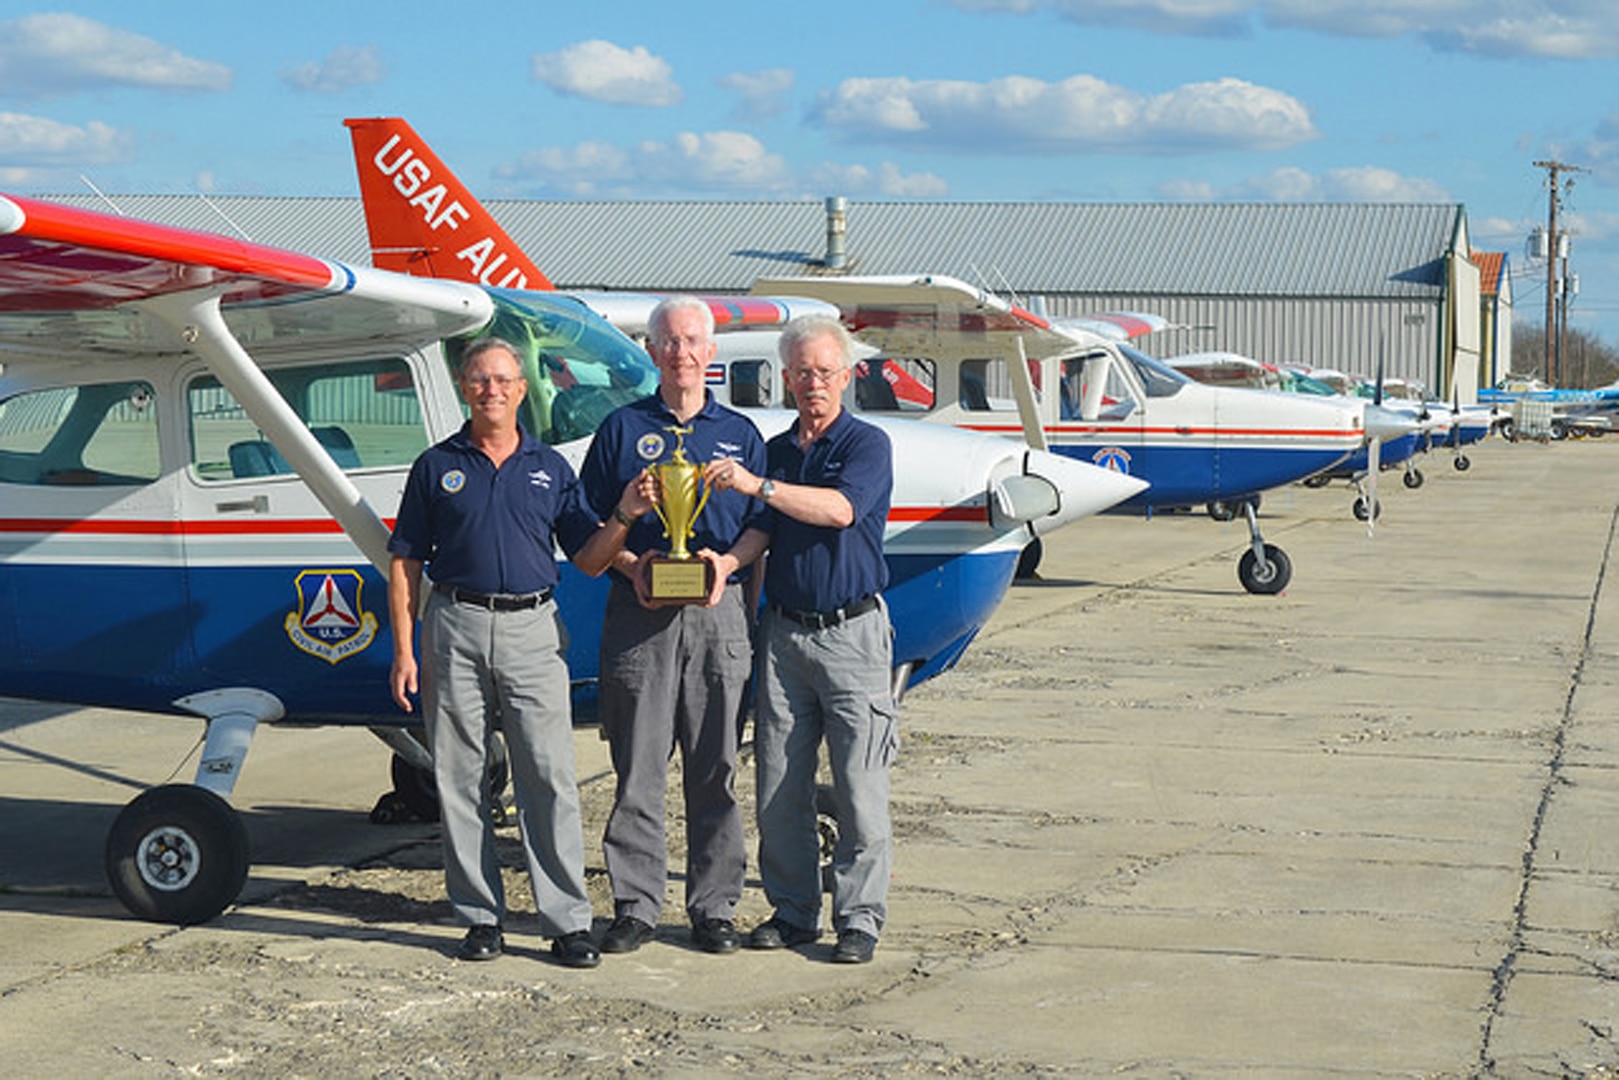 occupational-analysis-chief-s-team-wins-civil-air-patrol-flight-event